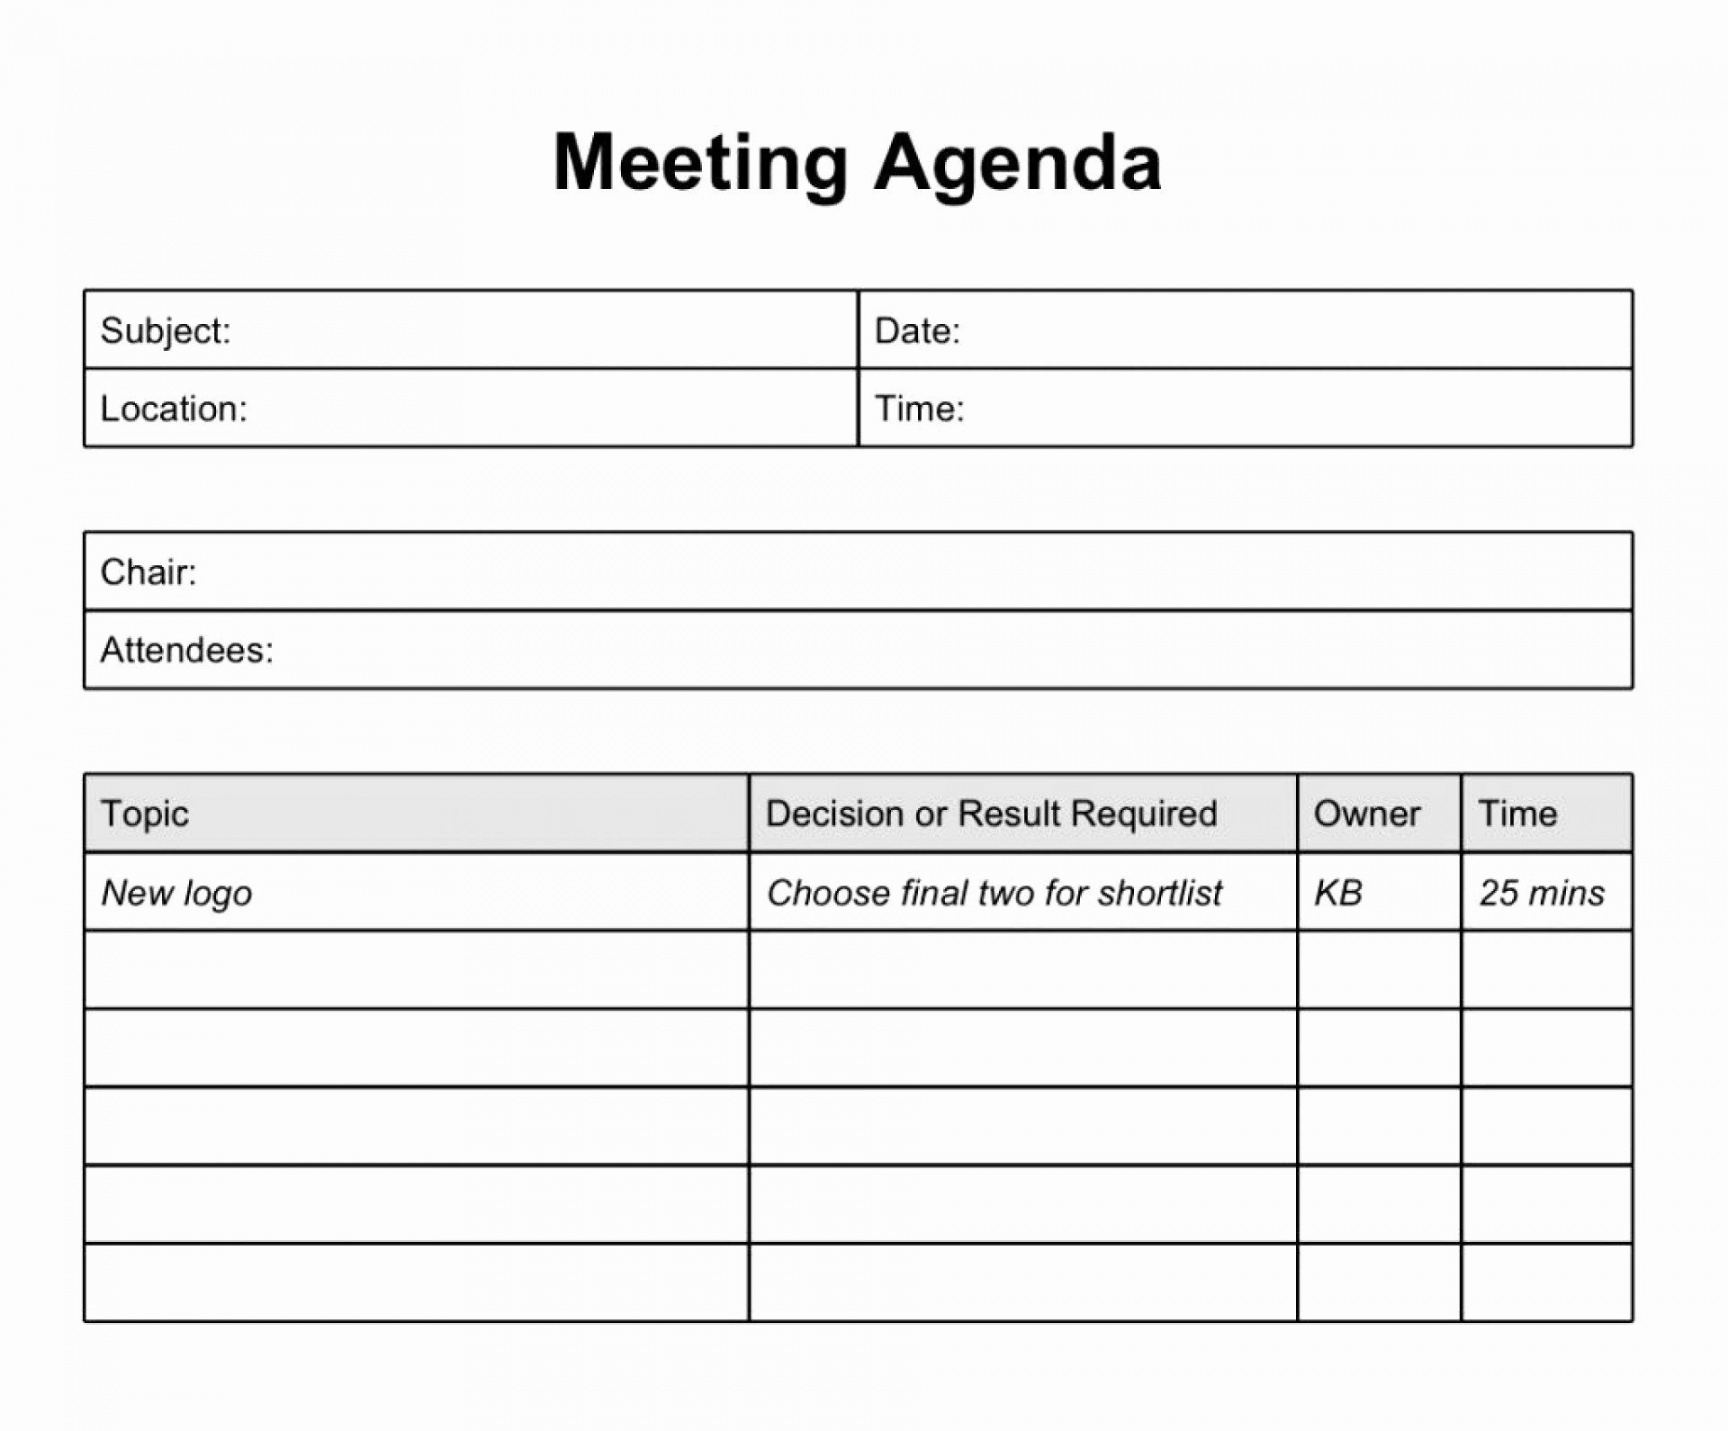 free school team meeting agenda template team agenda meeting template pdf